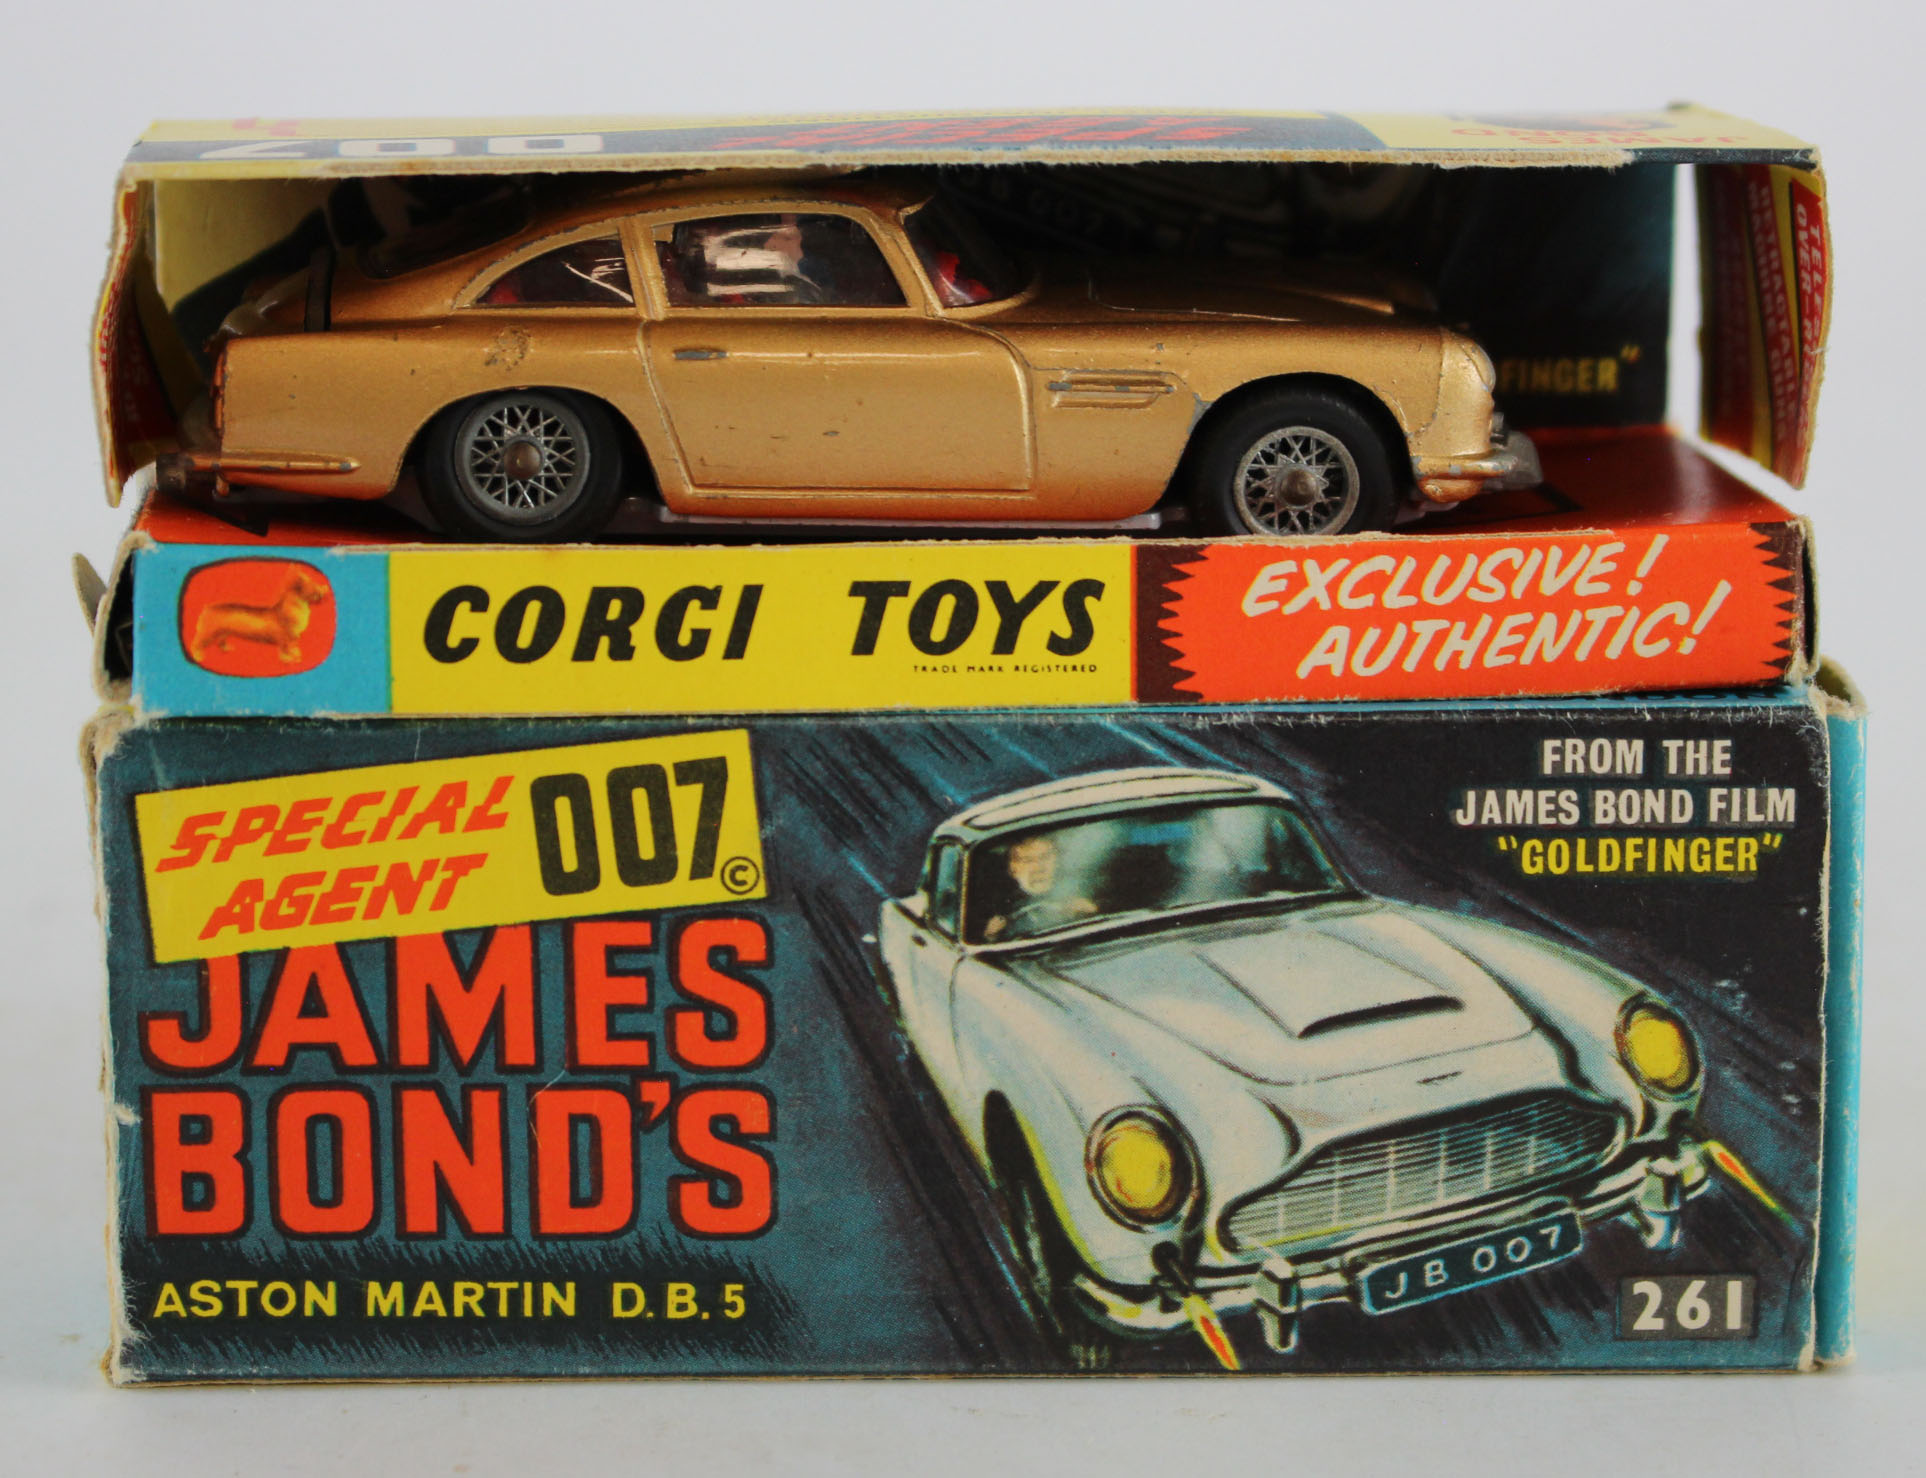 Corgi Toys, no. 261 'Special Agent 007, James Bonds Aston Martin DB5', with insert, instructions &